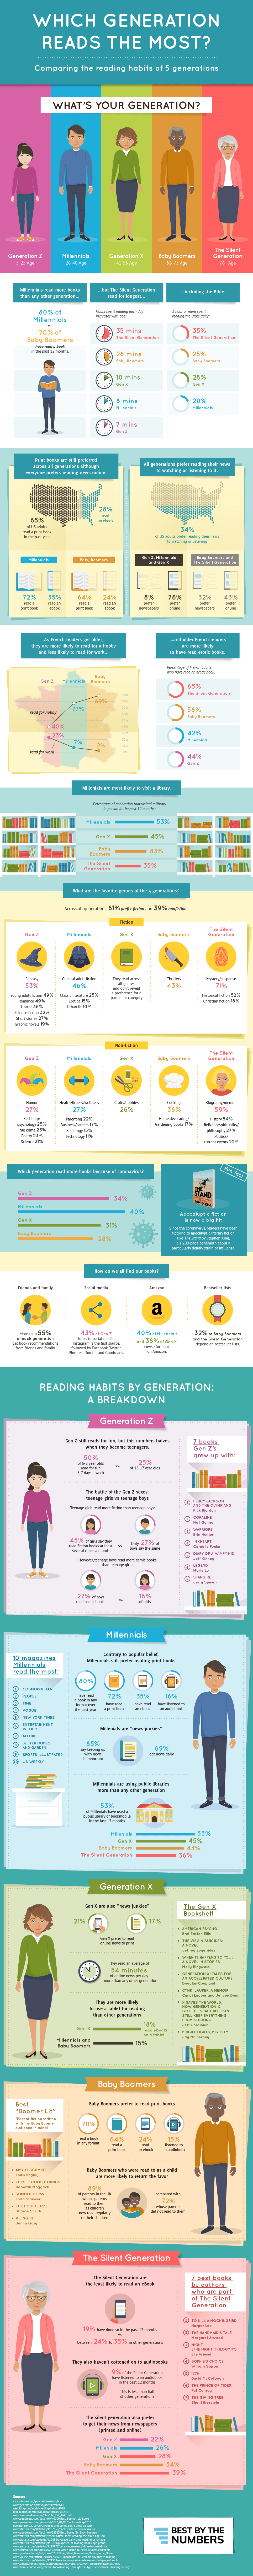 generational reading habits